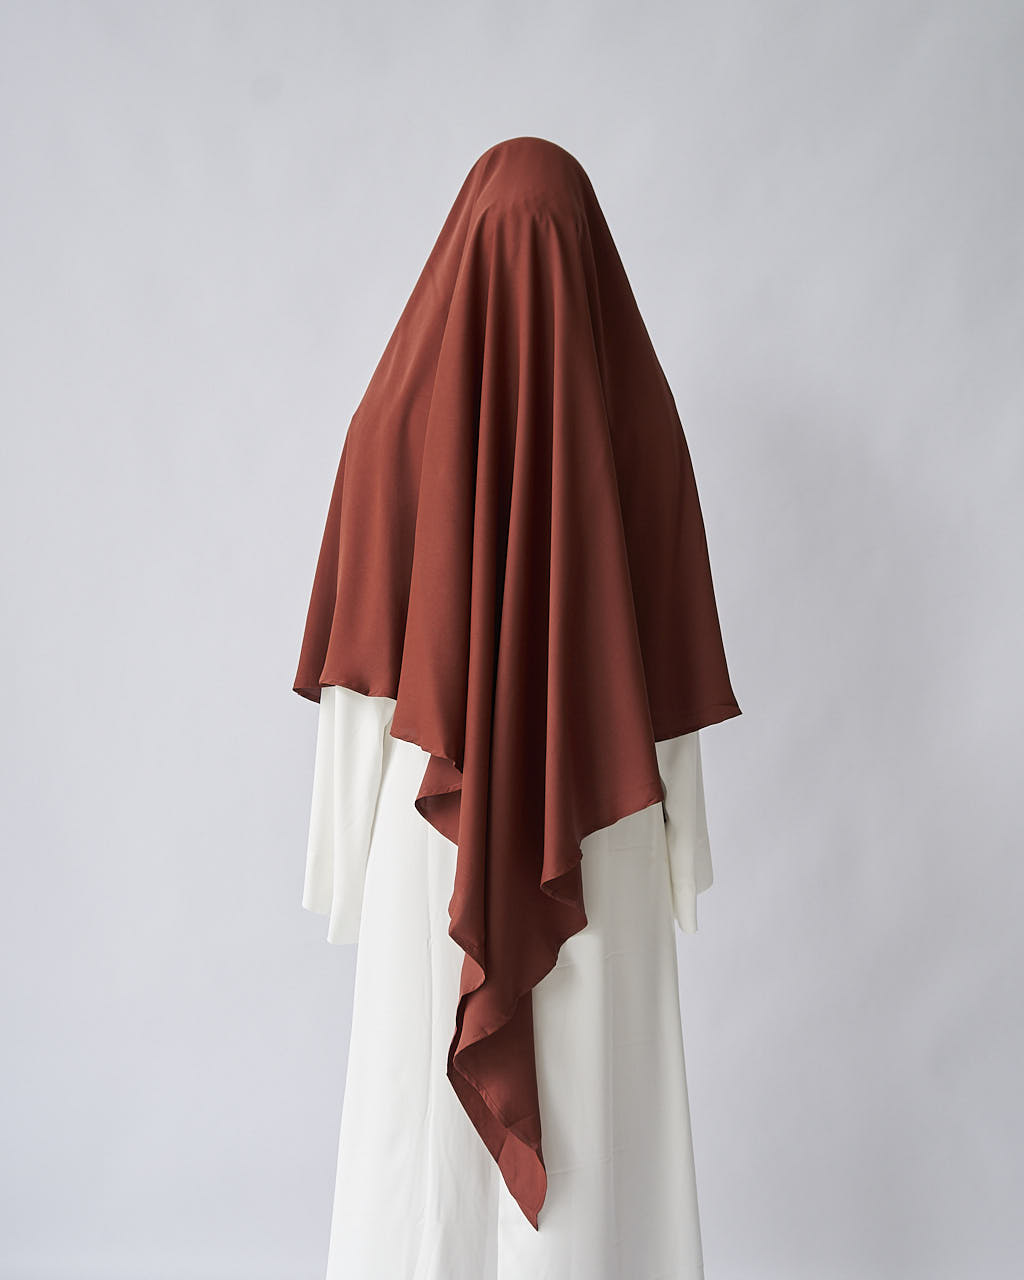 Fajr Noor - Best Sellers Modest Clothing Abayas Hijab Online Australia